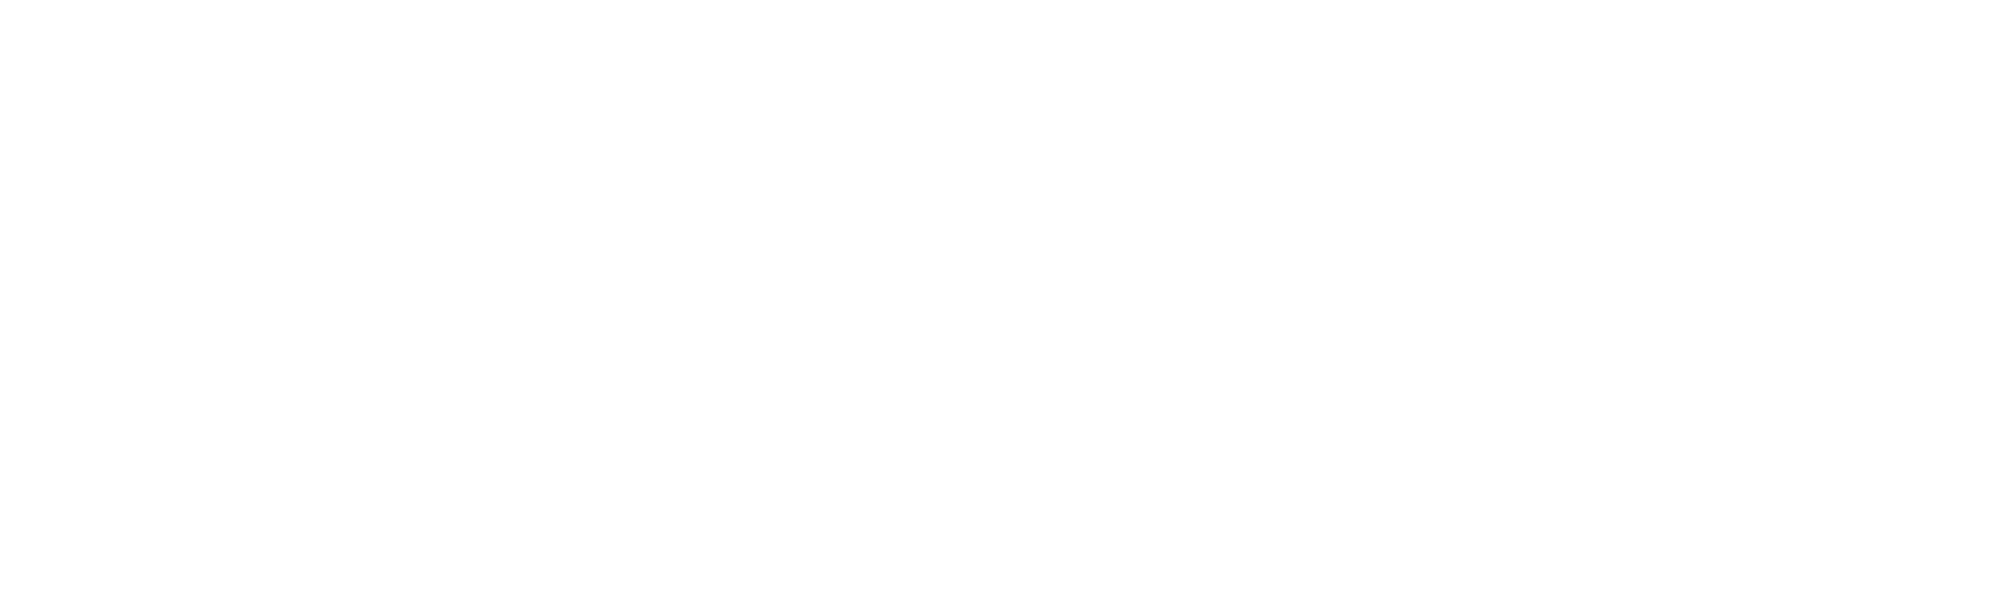 KBD Logo - Coming Soon